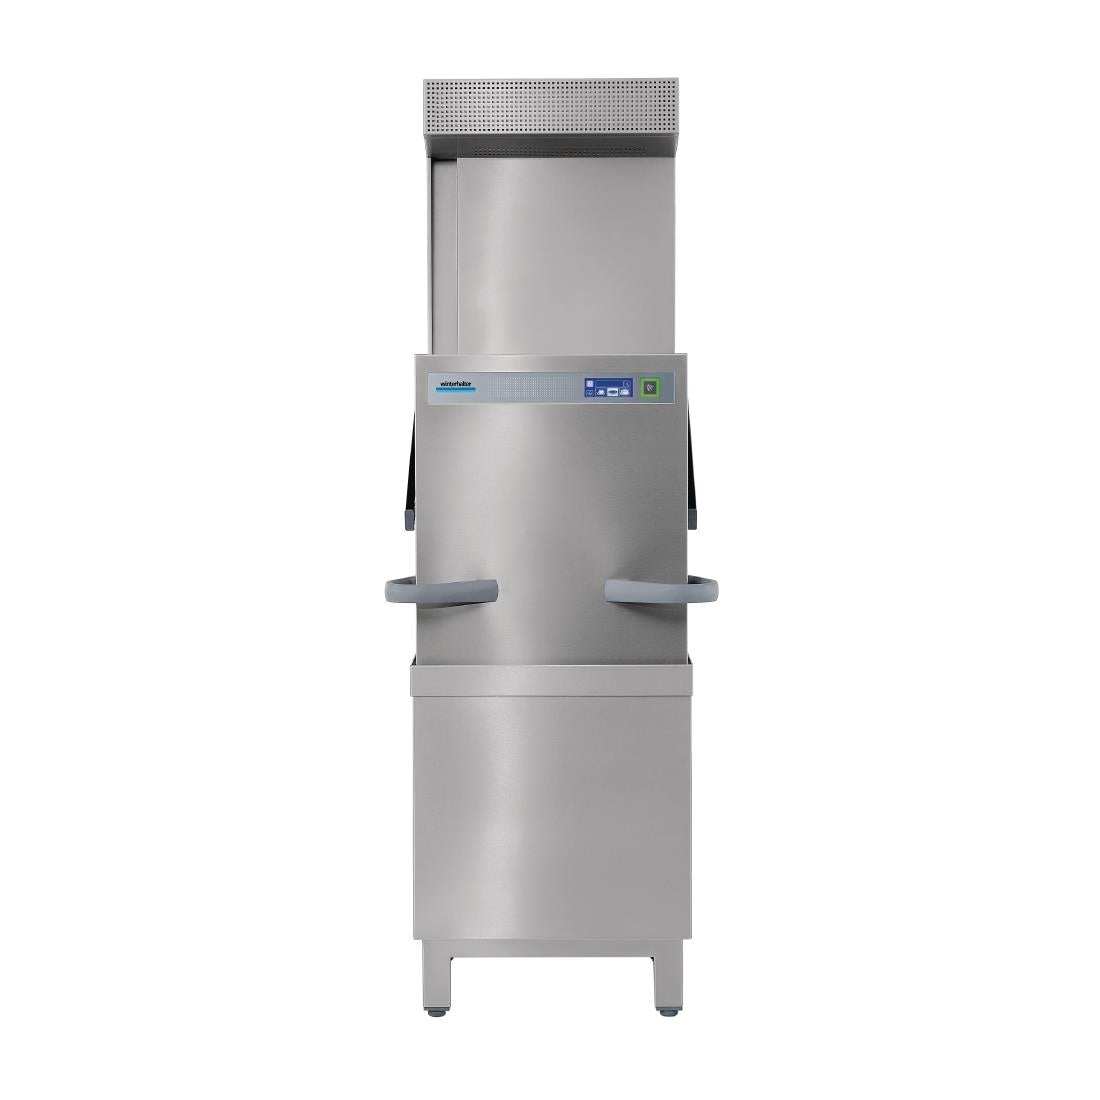 Winterhalter Pass Through Dishwasher PT-M-1 Energy with Install